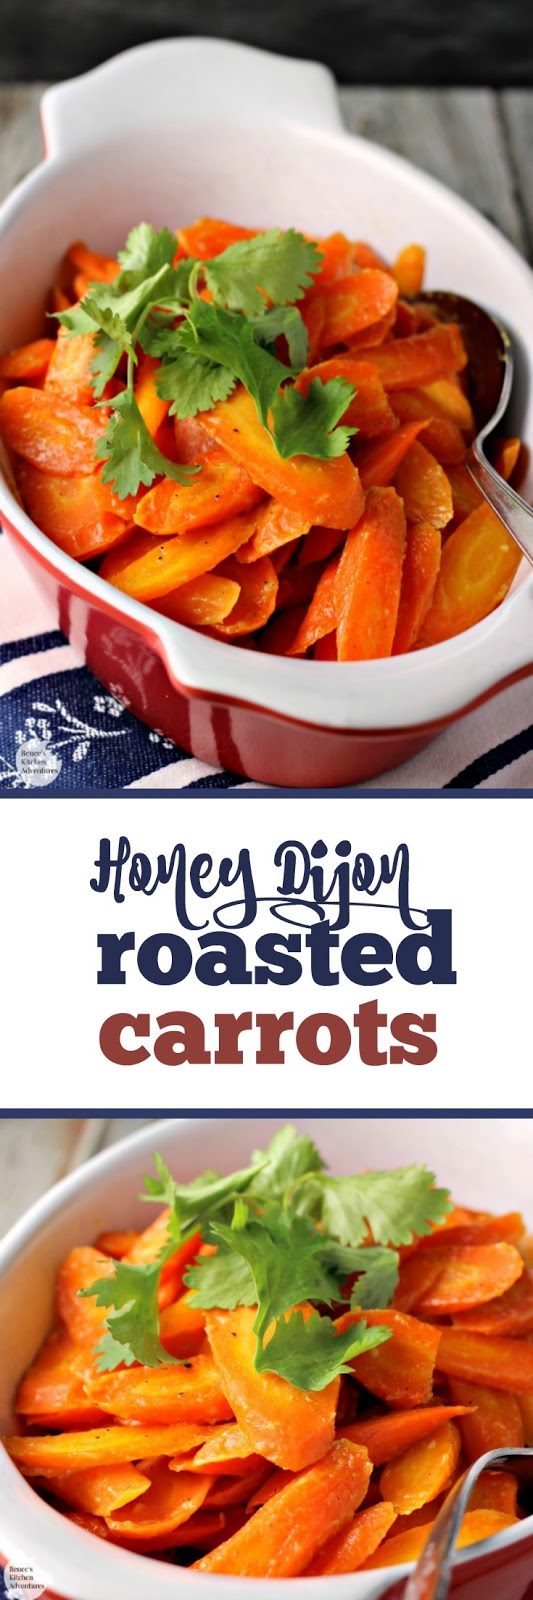 Honey Dijon Roasted Carrots | by Renee's Kitchen Adventures - easy vegetable side dish recipe for tasty carrots! #SundaySupper #RKArecipes #vegetarian 